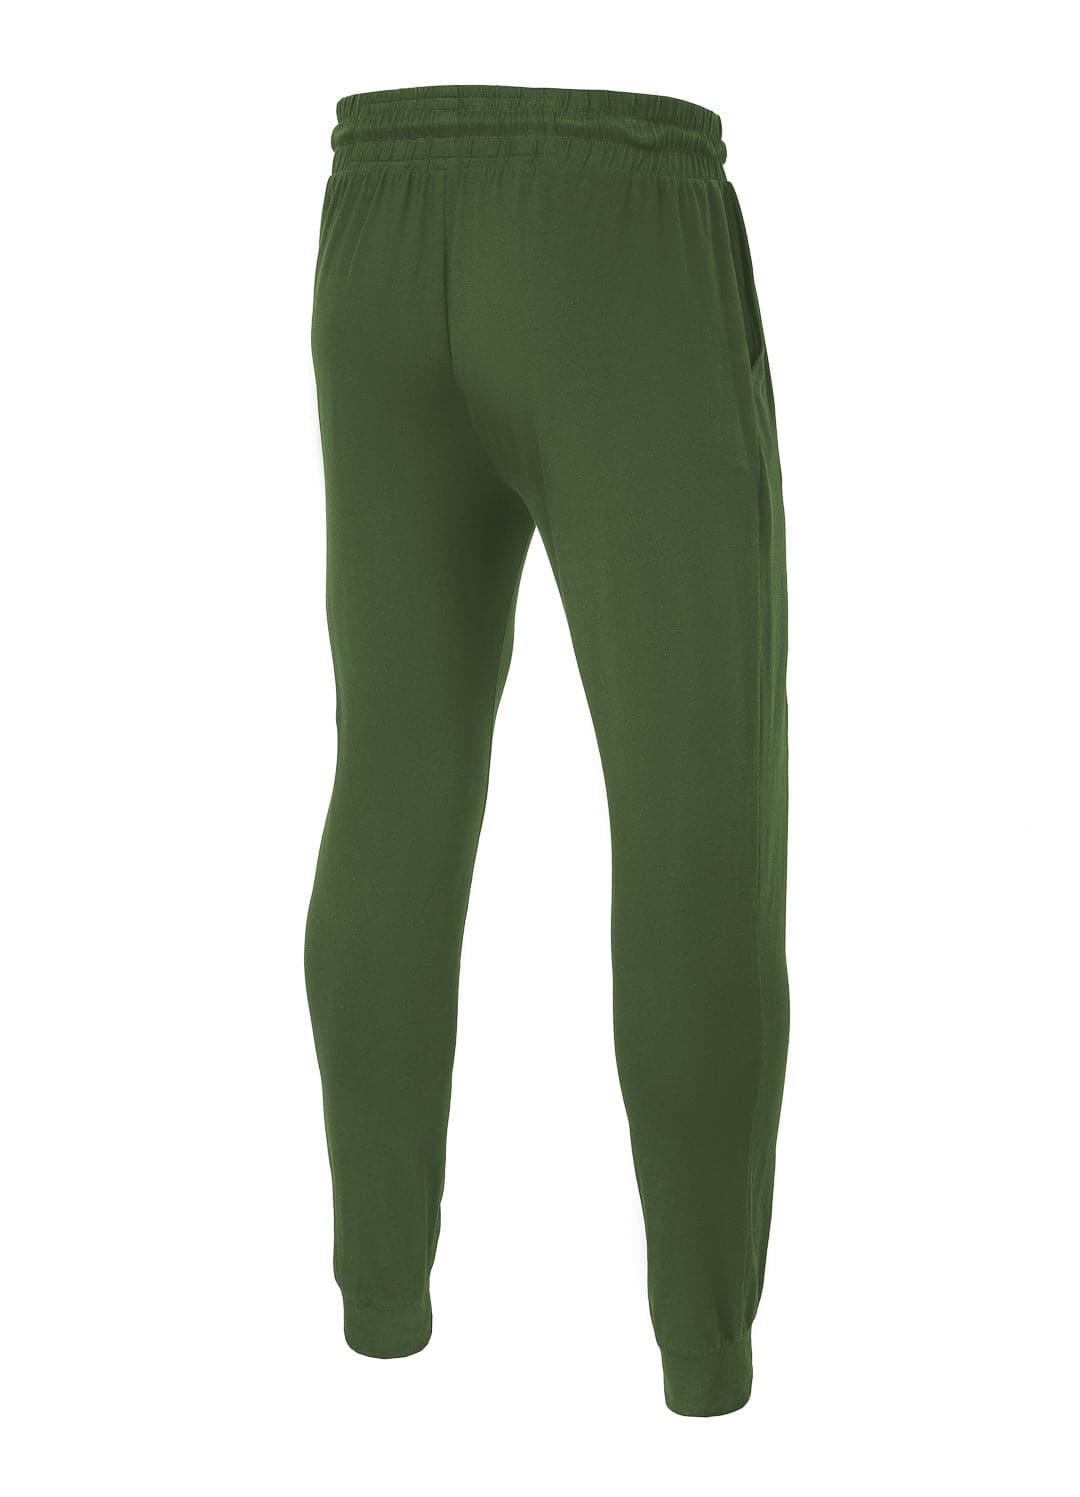 Jogging Pants DURANGO Spandex 210 GSM Olive - Pitbull West Coast International Store 